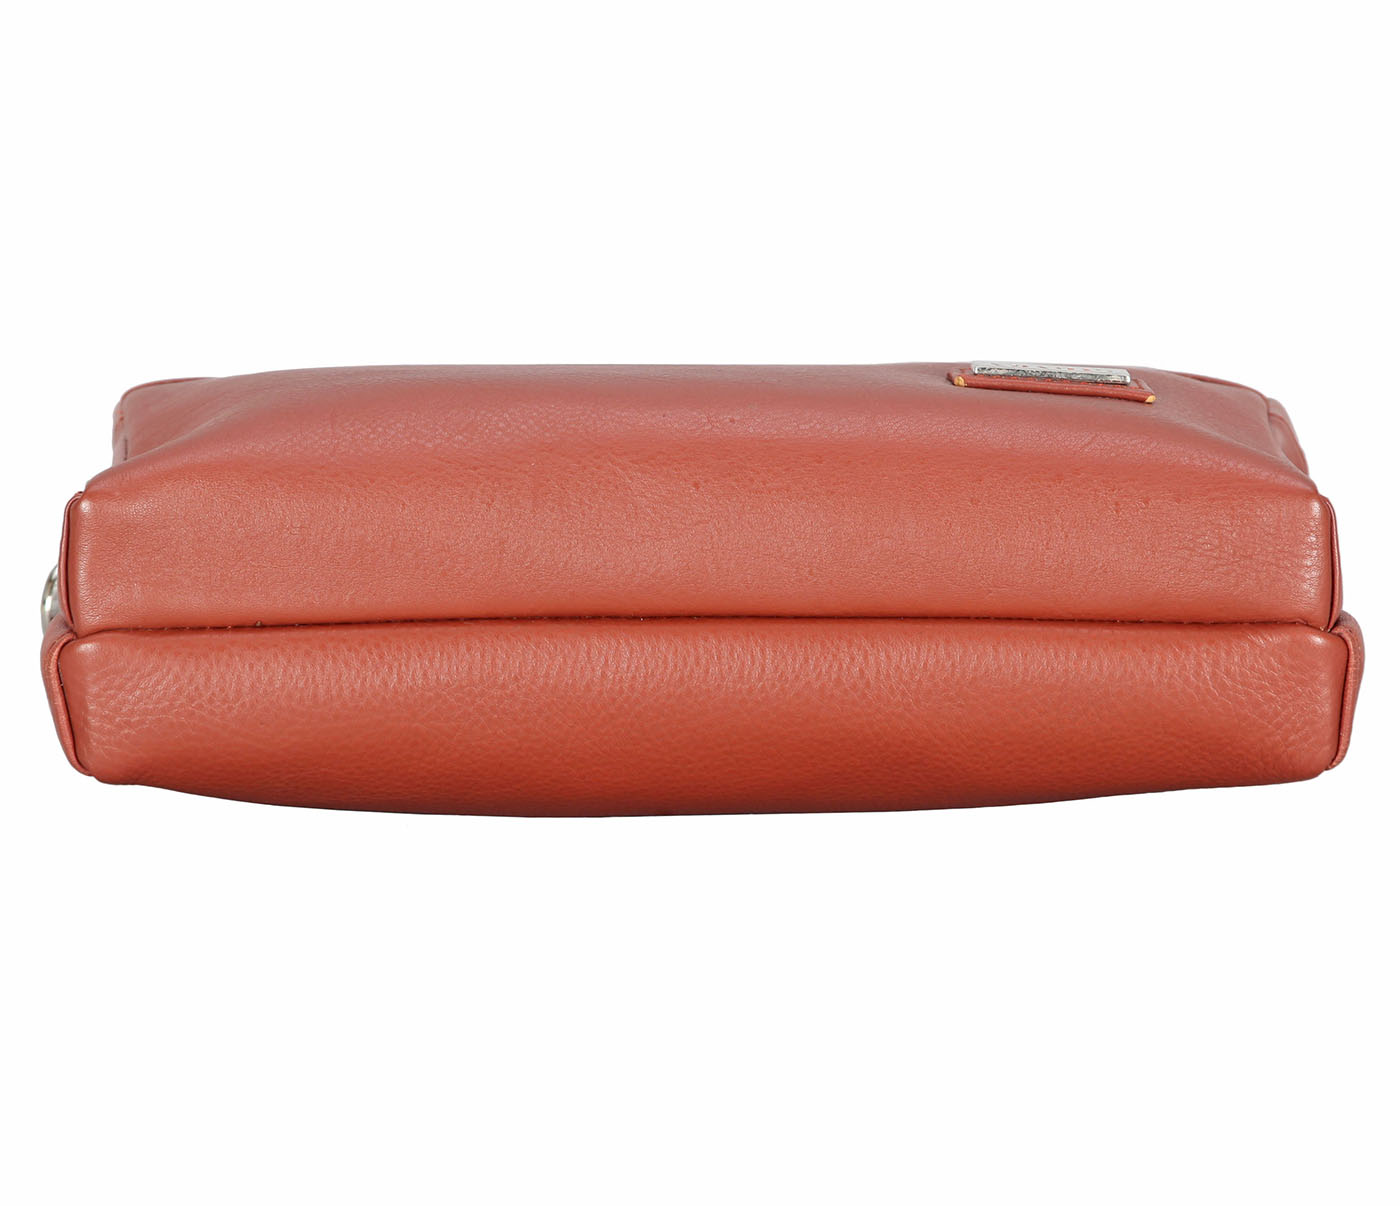 P20-Fernando-Men's bag cum travel pouch in Genuine Leather - Tan